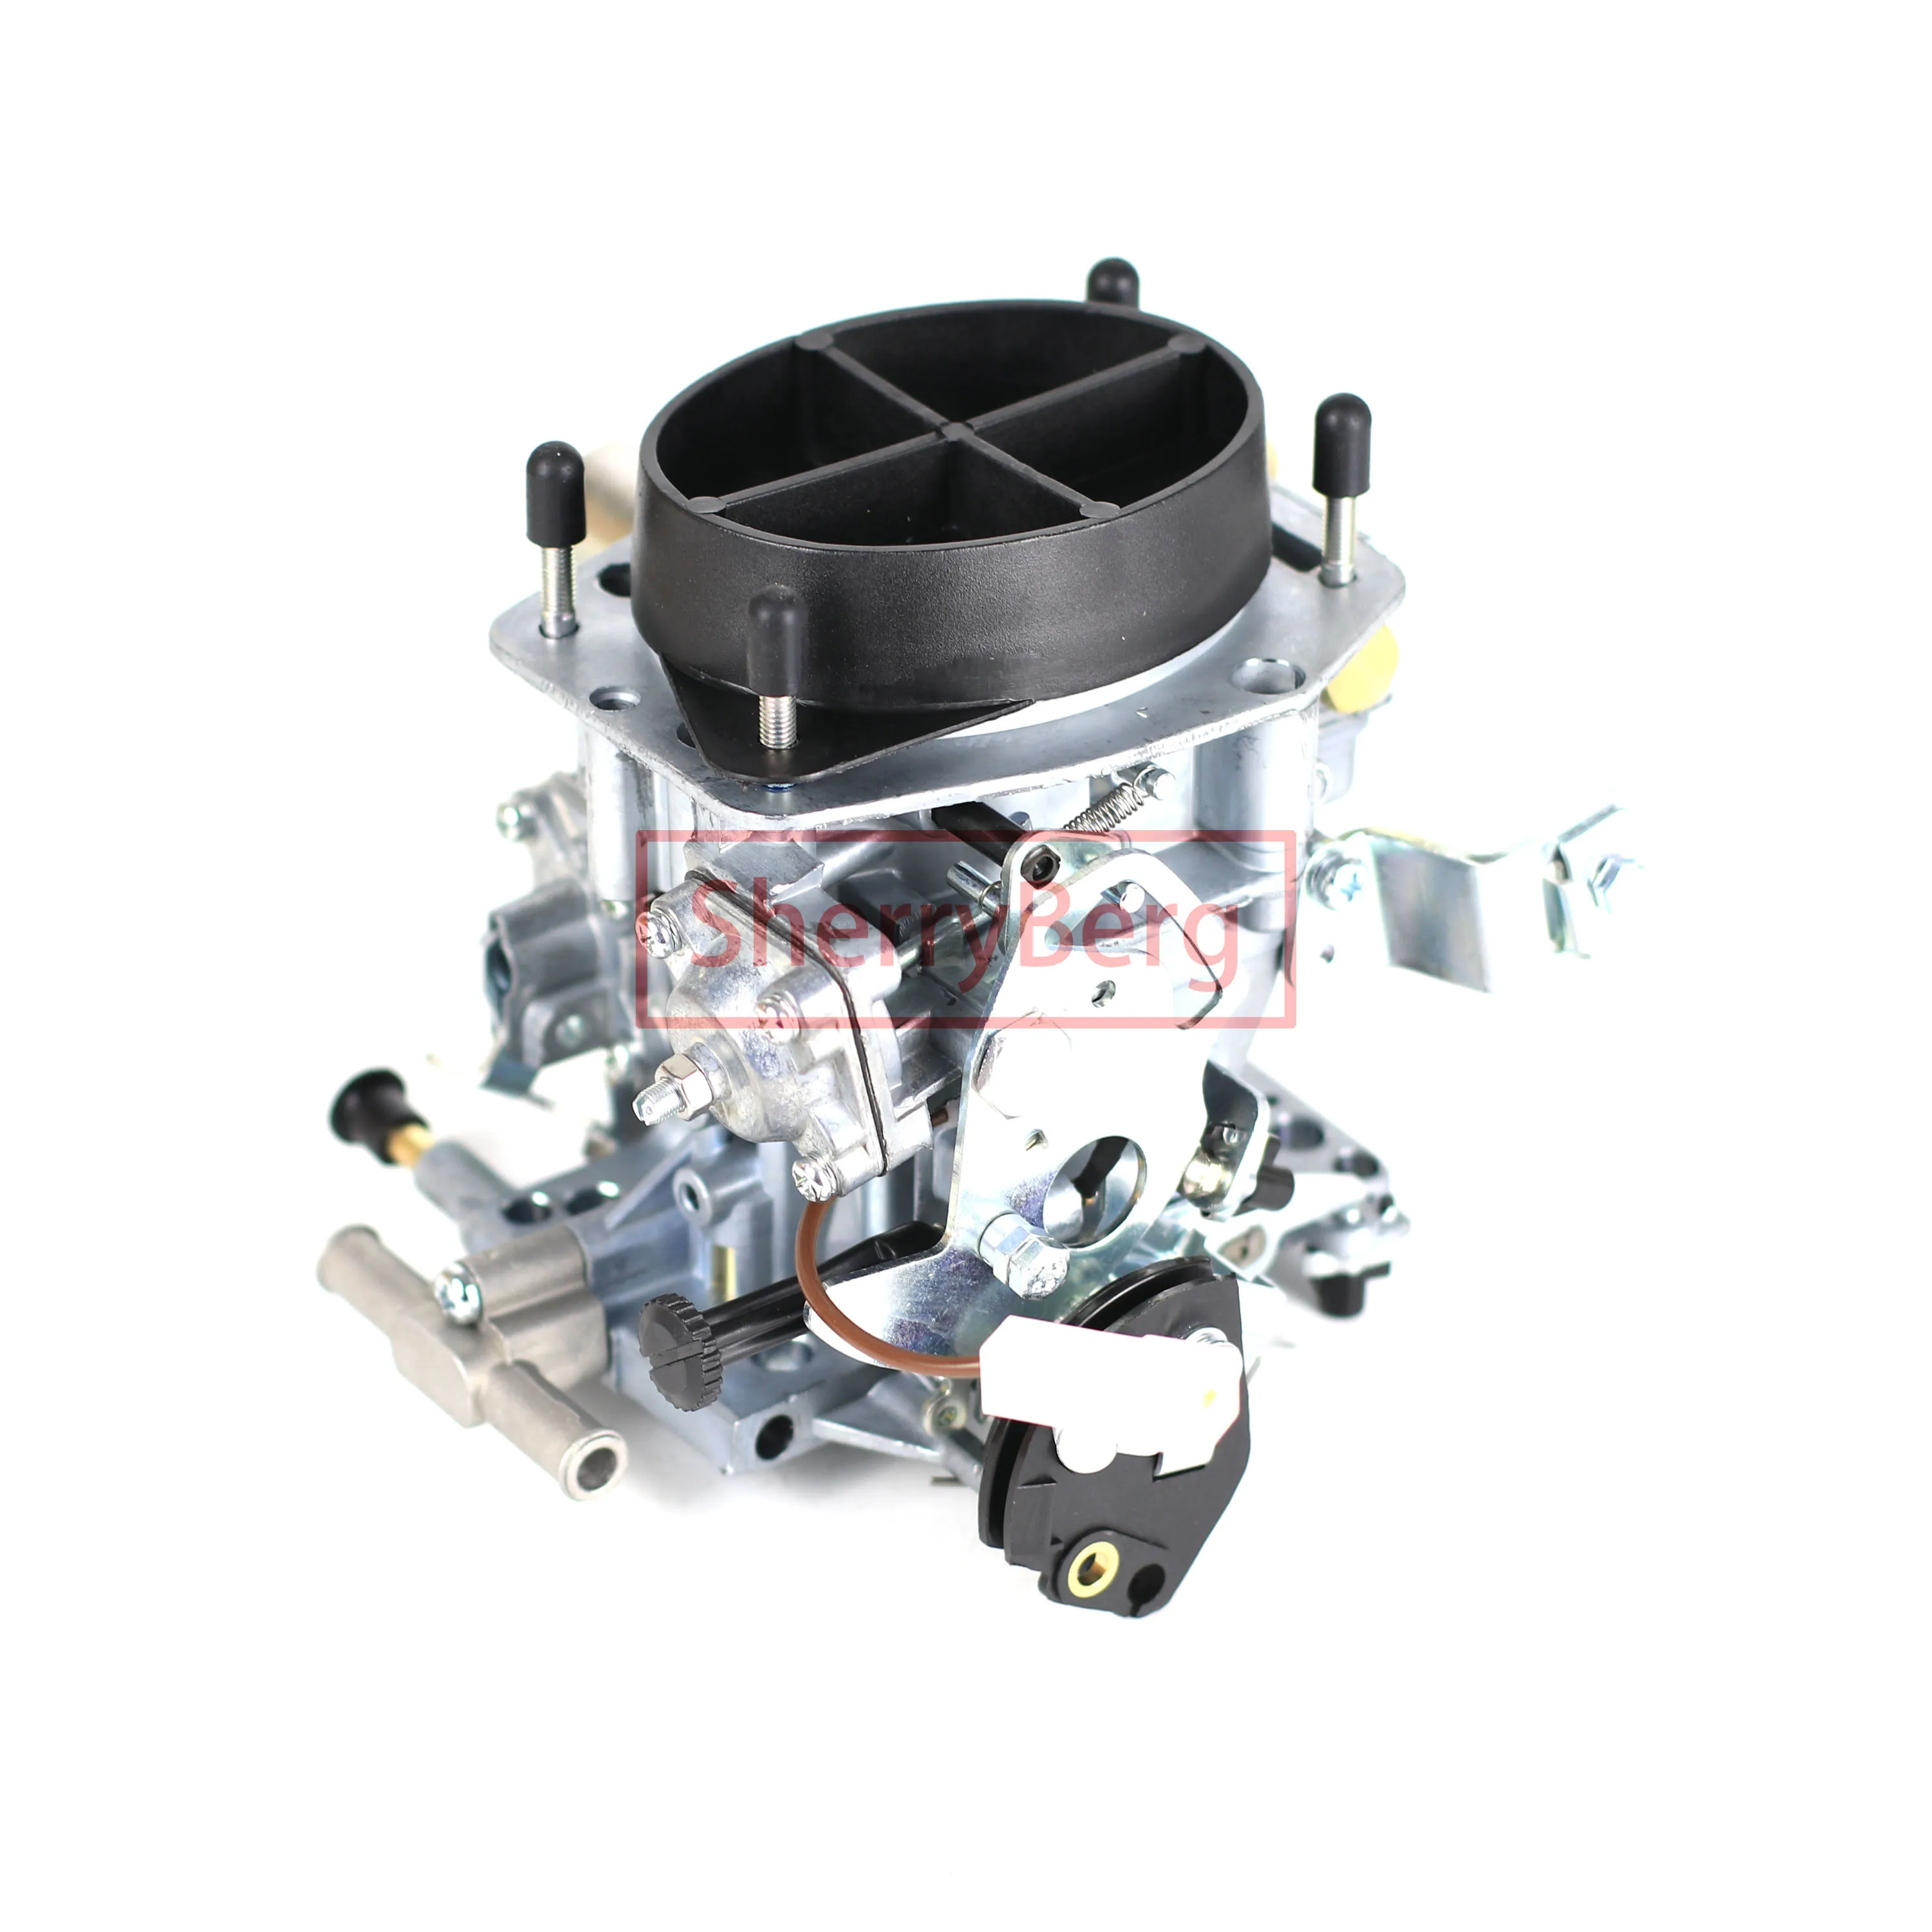 

SherryBerg Fit for WEBER SOLEX Zenith Model Carburettor Carb Carburador 21081 for LADA 21081-1107010 NIVA 1600-1700-1800